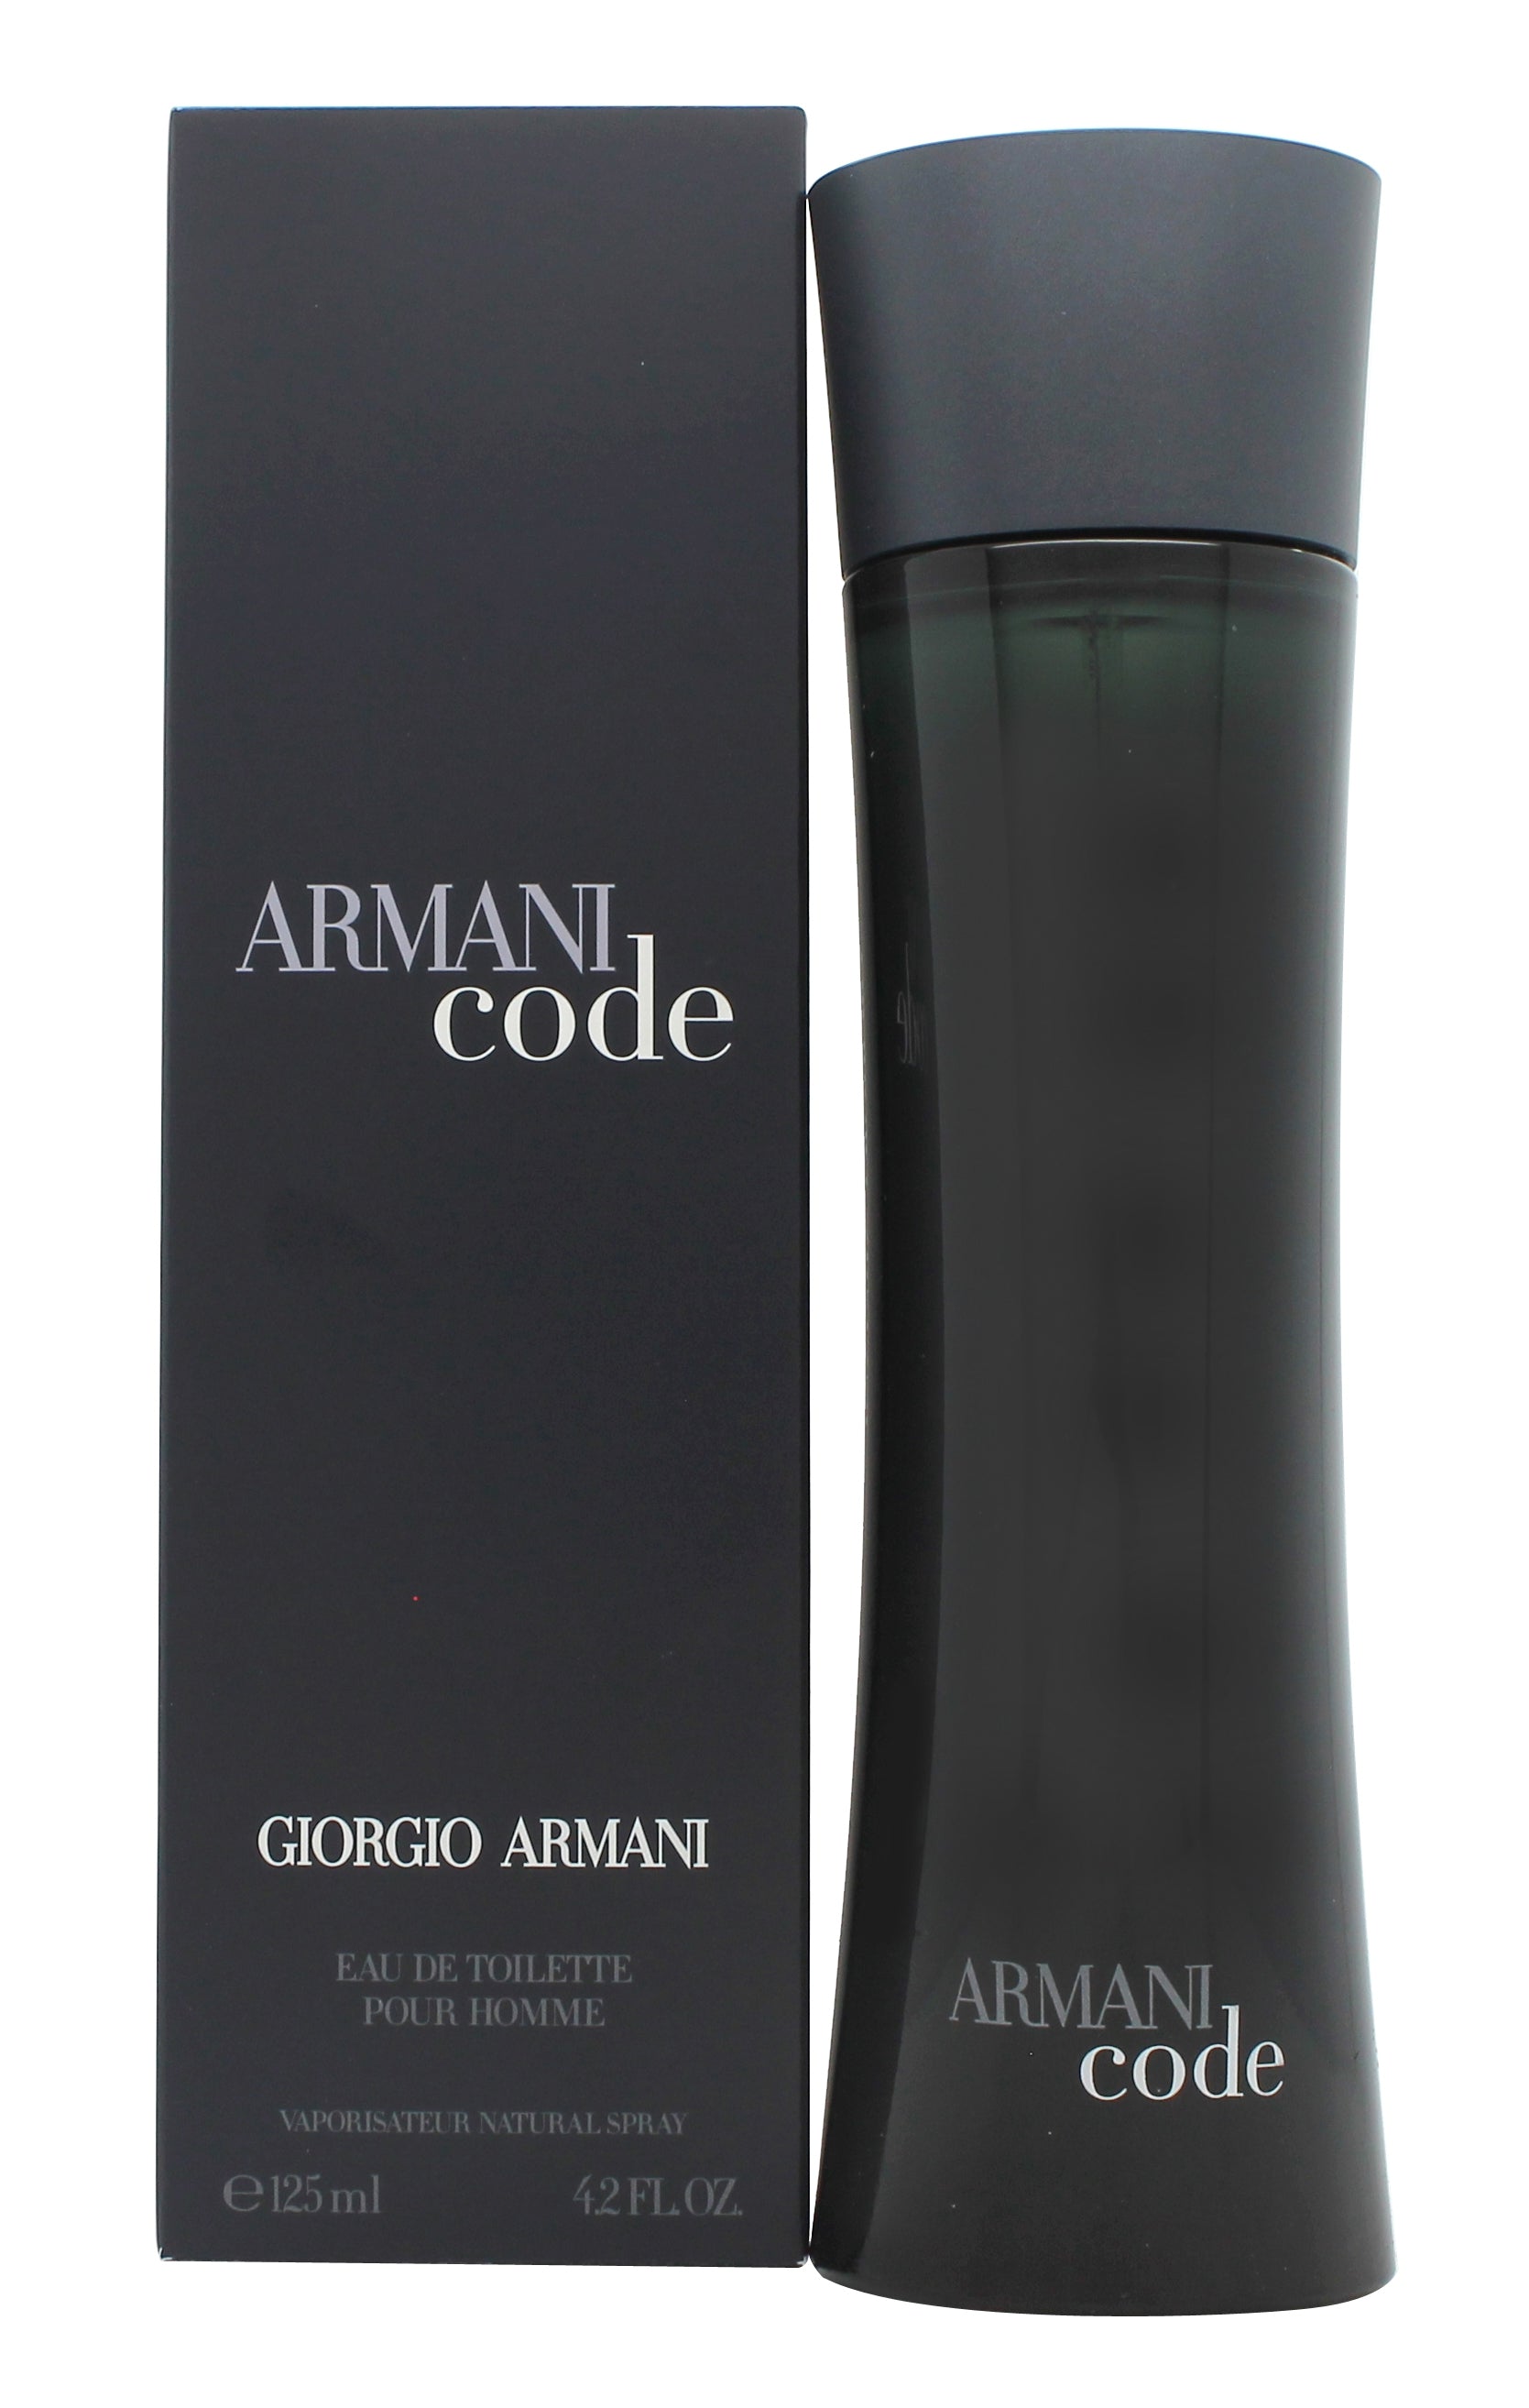 Code homme. Giorgio Armani Armani code 125. Armani code мужской 100 ml. Giorgio Armani Armani code Eau de Toilette. Giorgio Armani "Armani code Parfum" 125 ml.